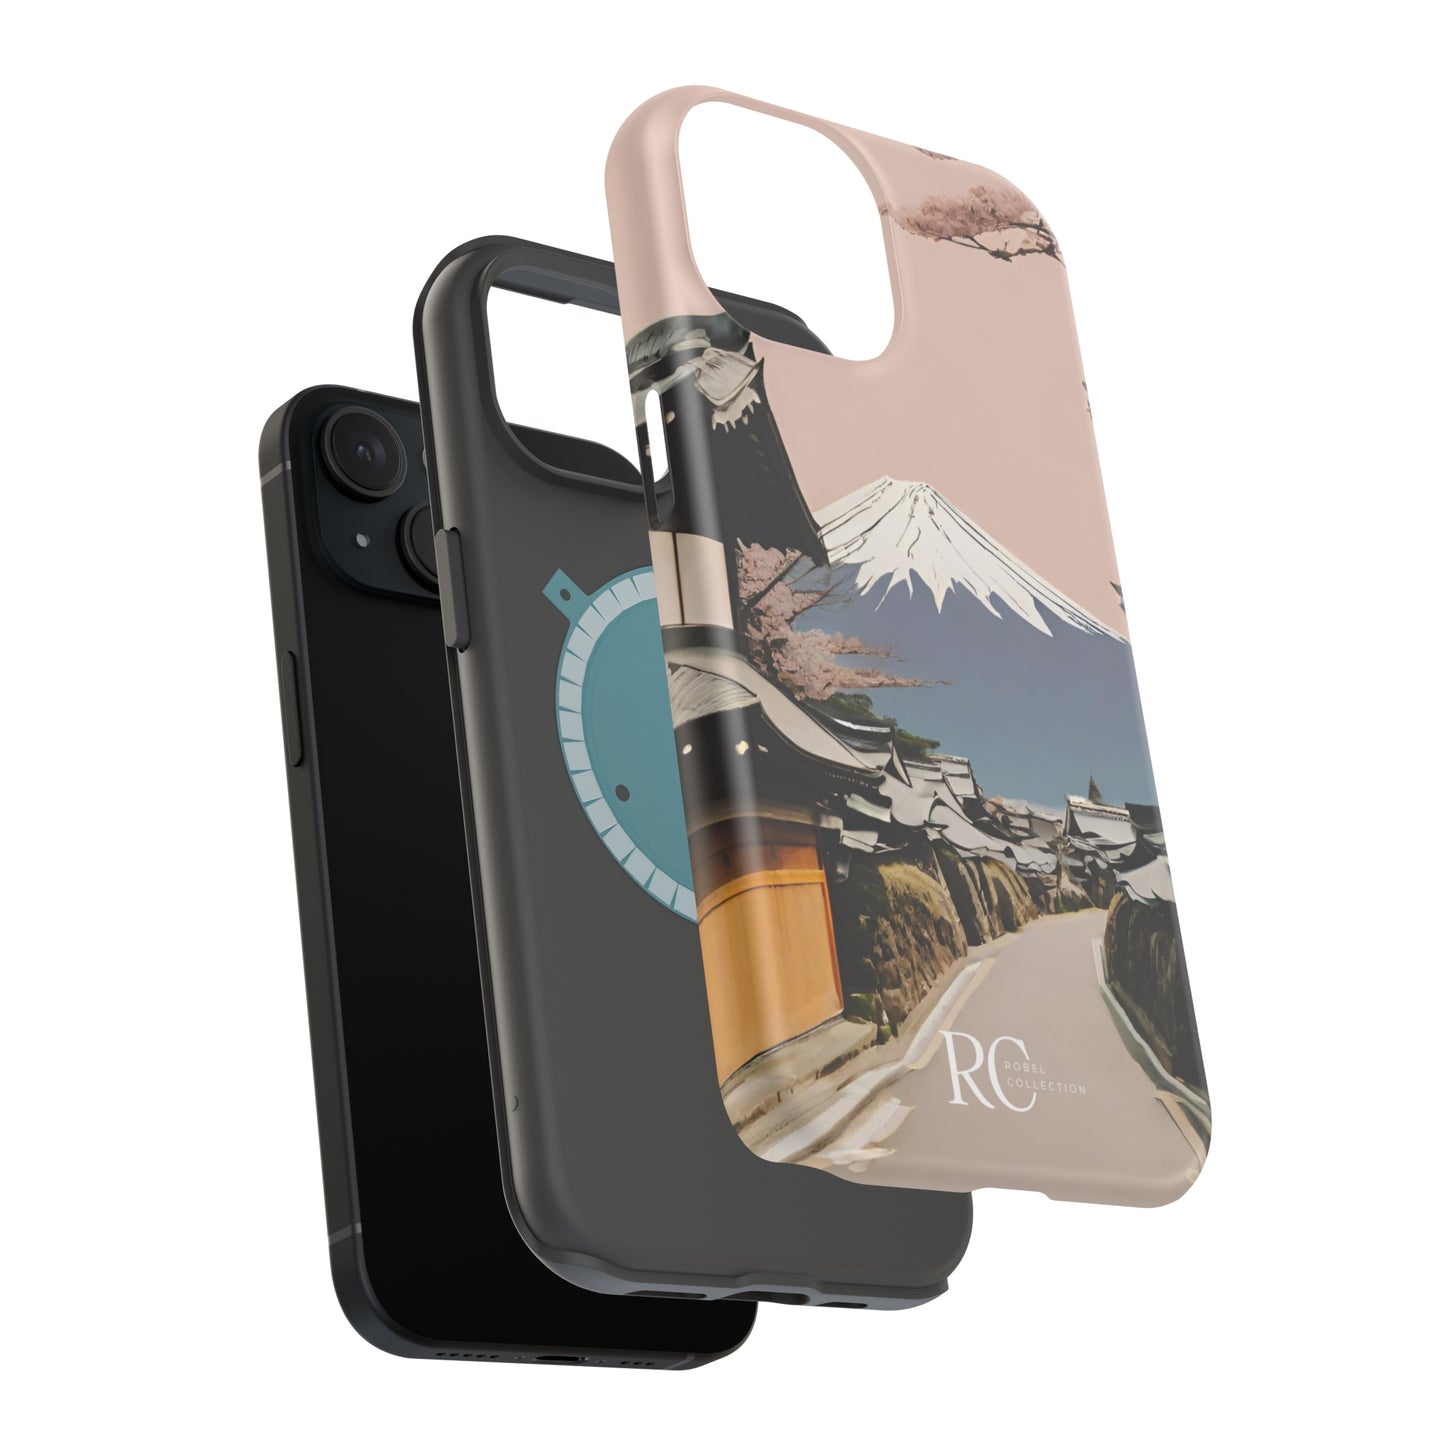 Japan-inspired Pink Minimalist MagSafe Tough iPhone Case